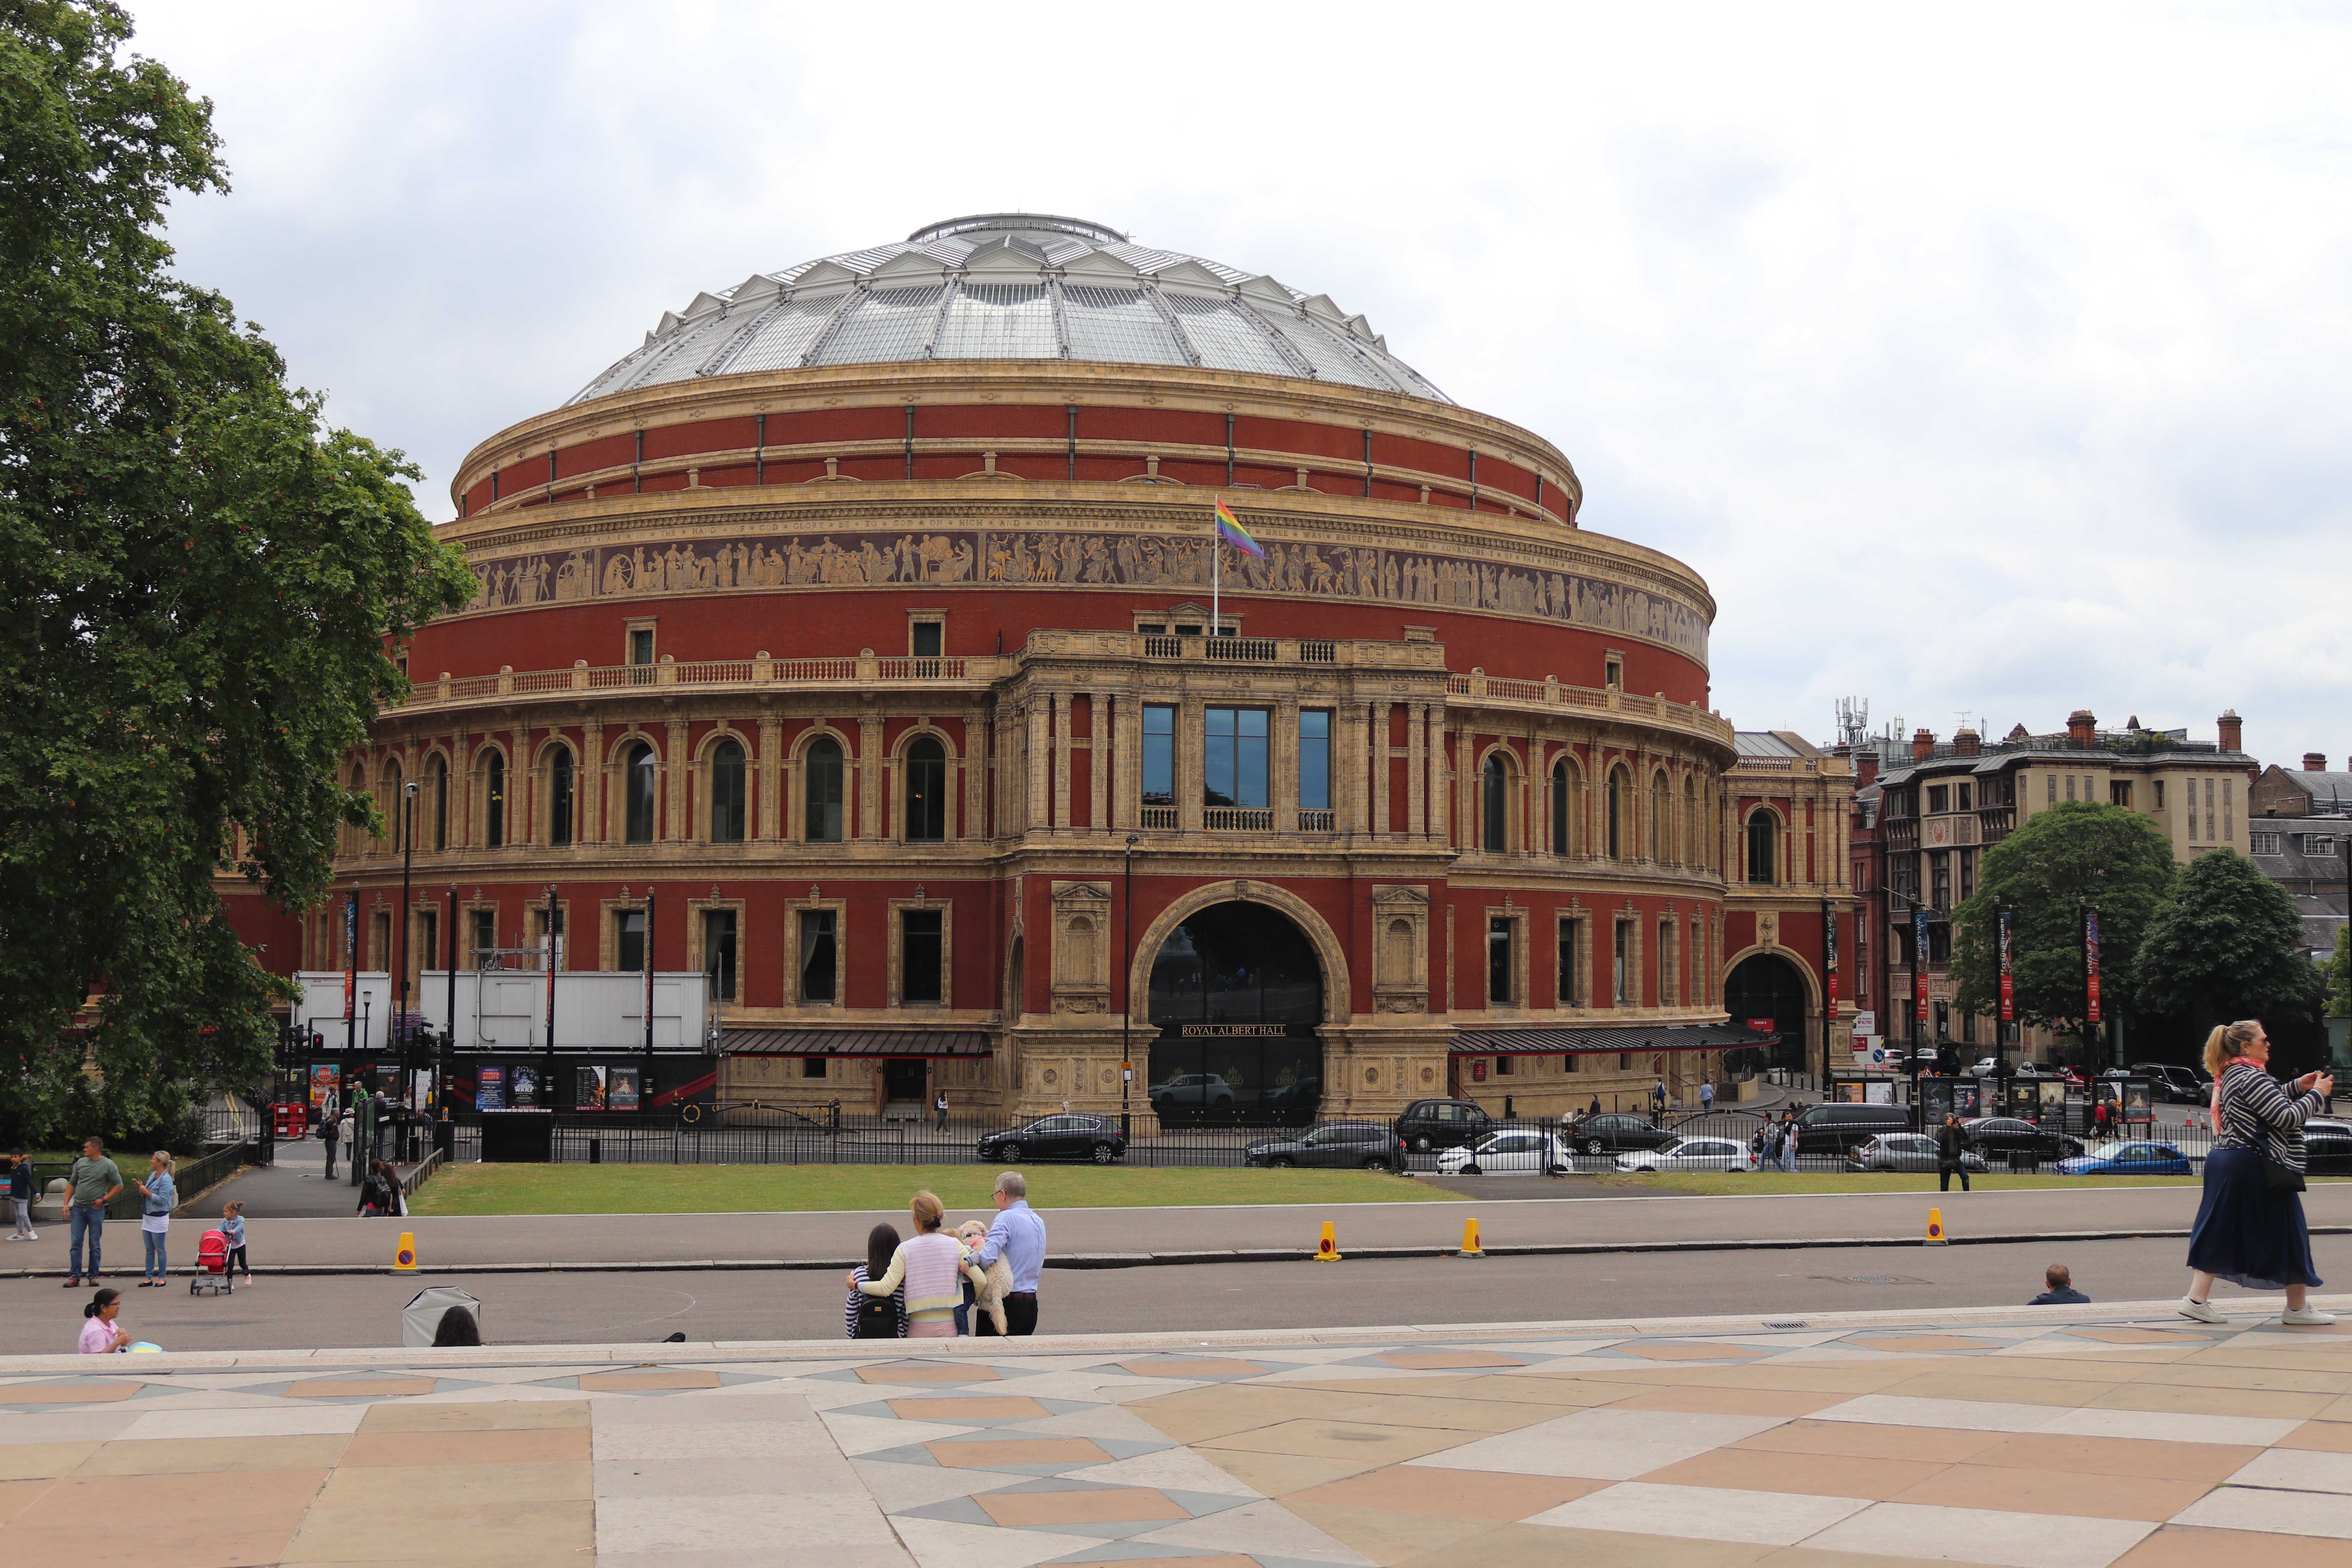 Royal Albert Hall from Kensington Gardens